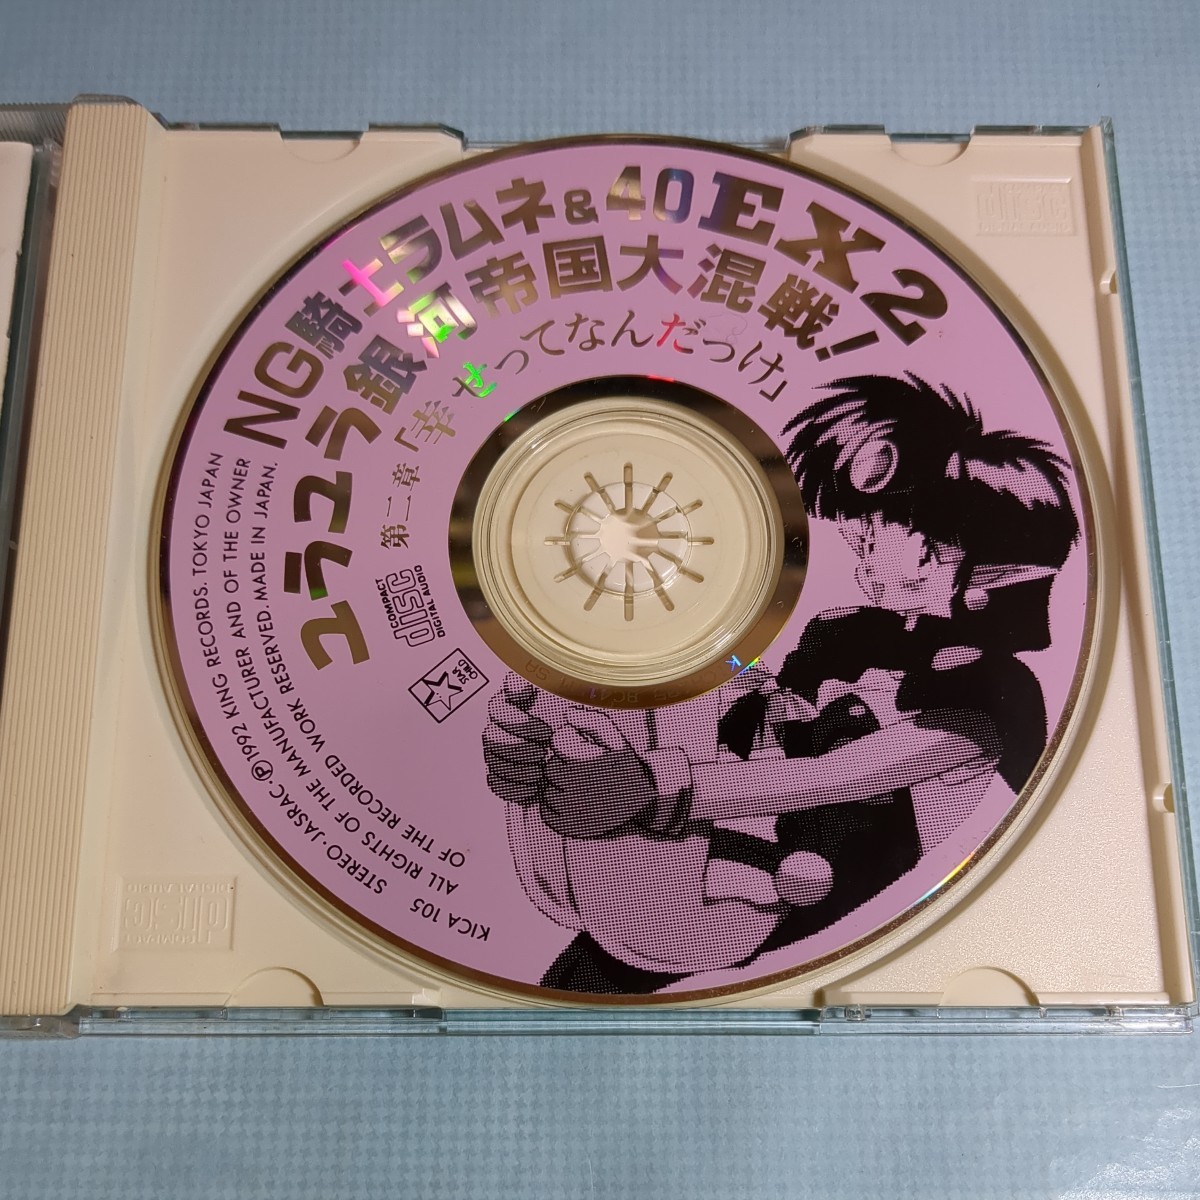 NG騎士ラムネ&40EX2 ユラユラ銀河帝国大混戦 第2章 CD